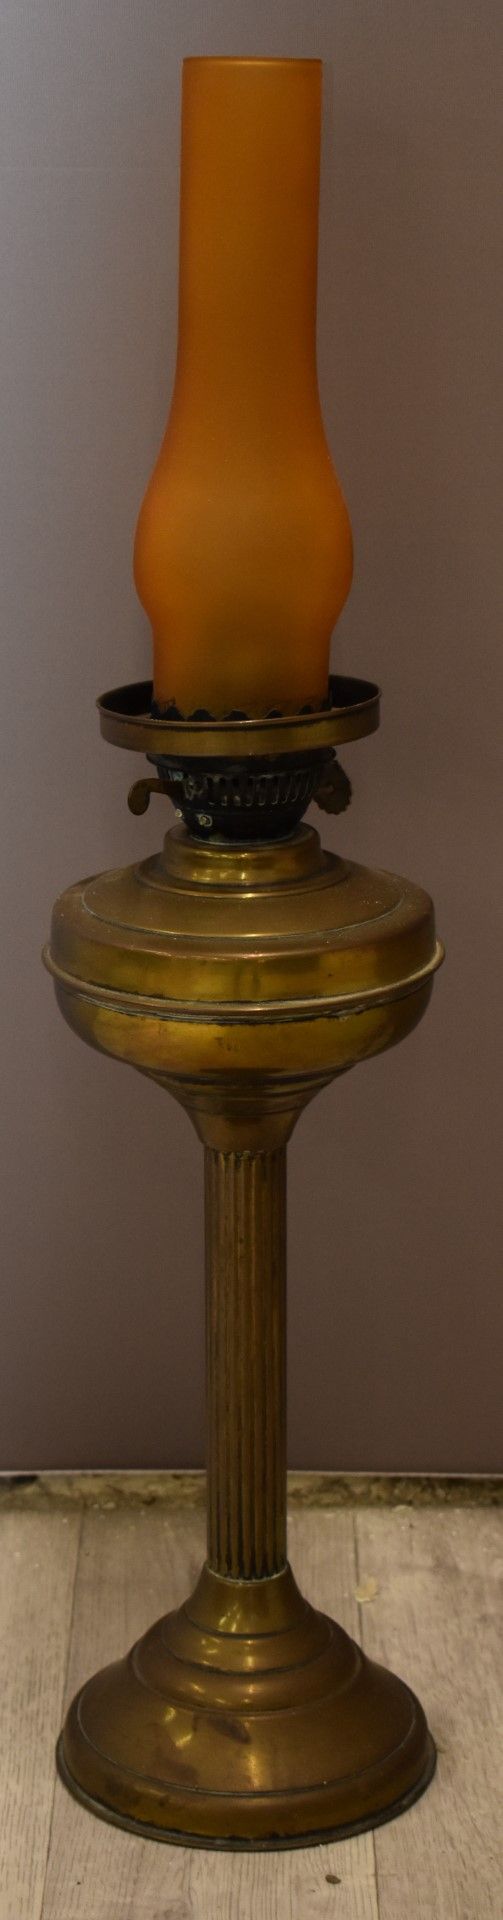 Copper samovar, Art Nouveau jug and a brass oil lamp, H66cm - Image 3 of 3